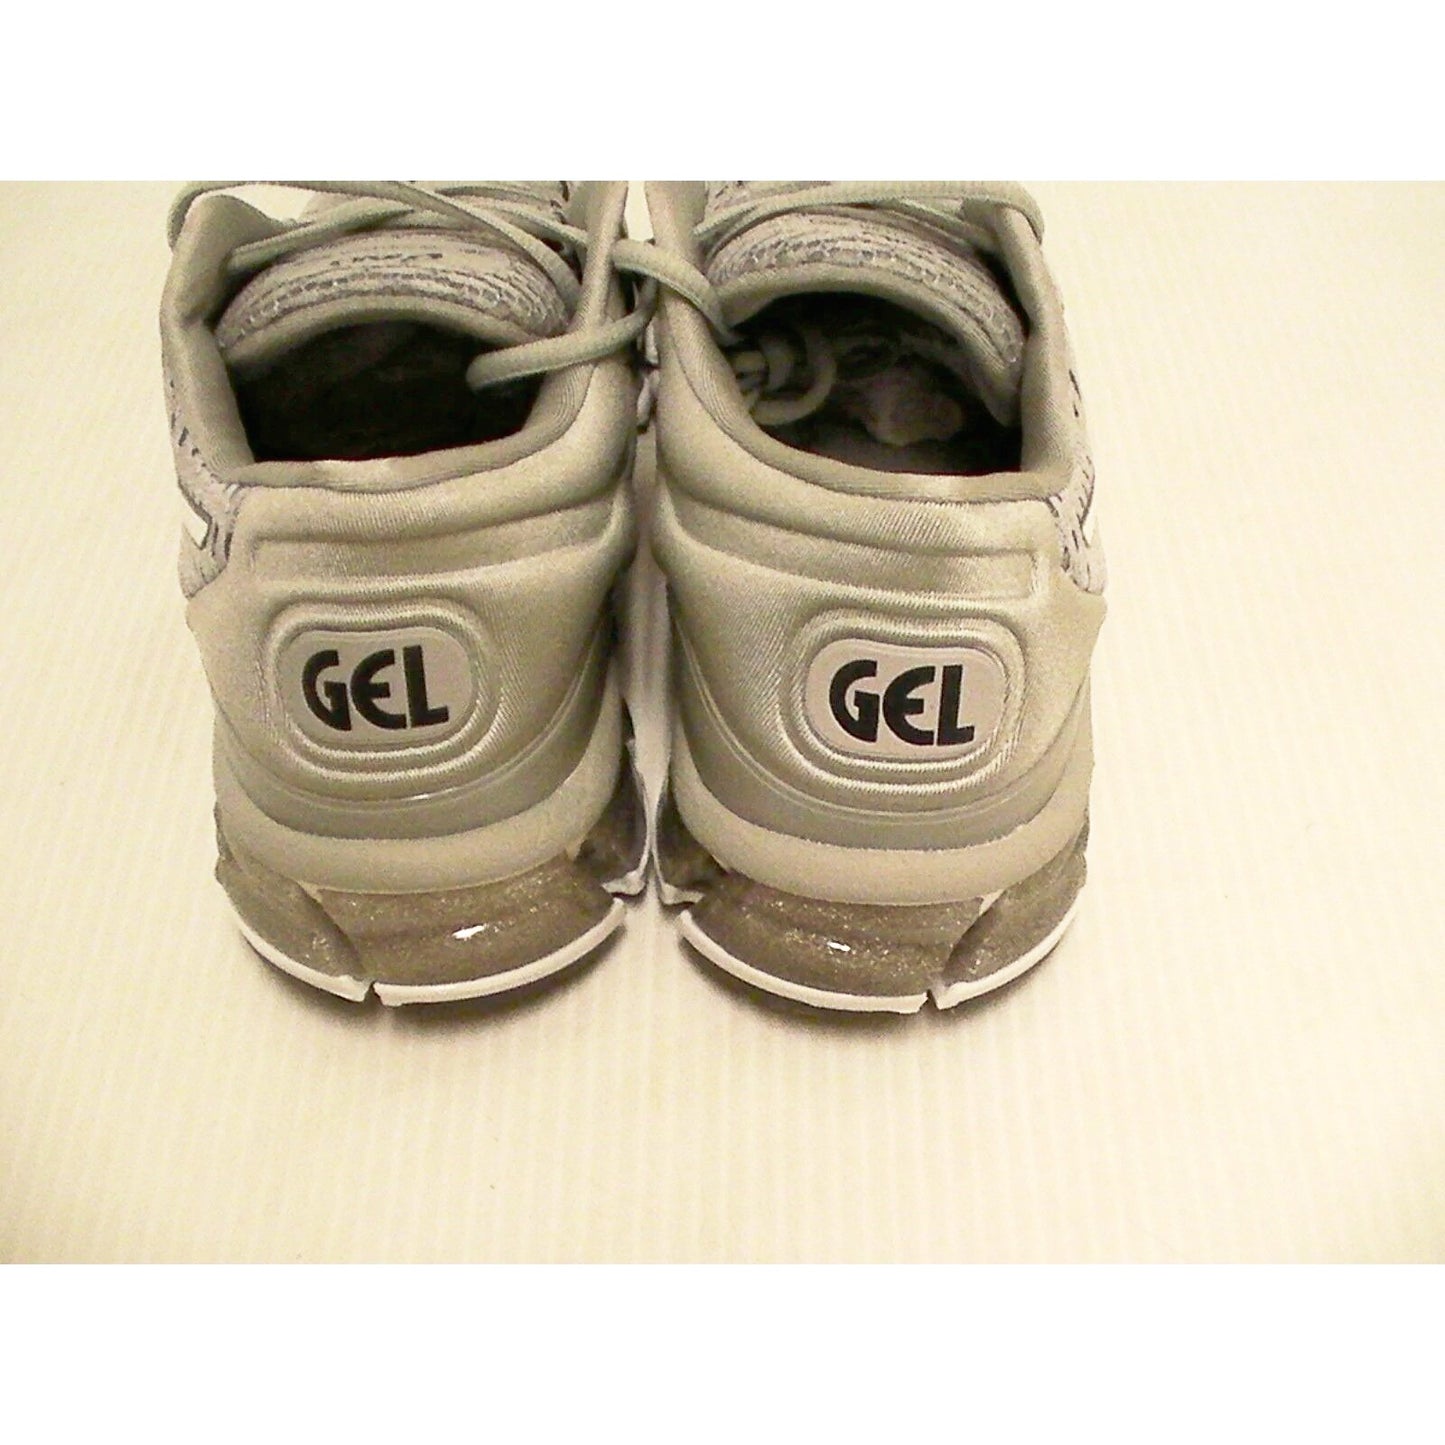 Asics women's gel quantum 360 shift mid grey running shoes size 7 us